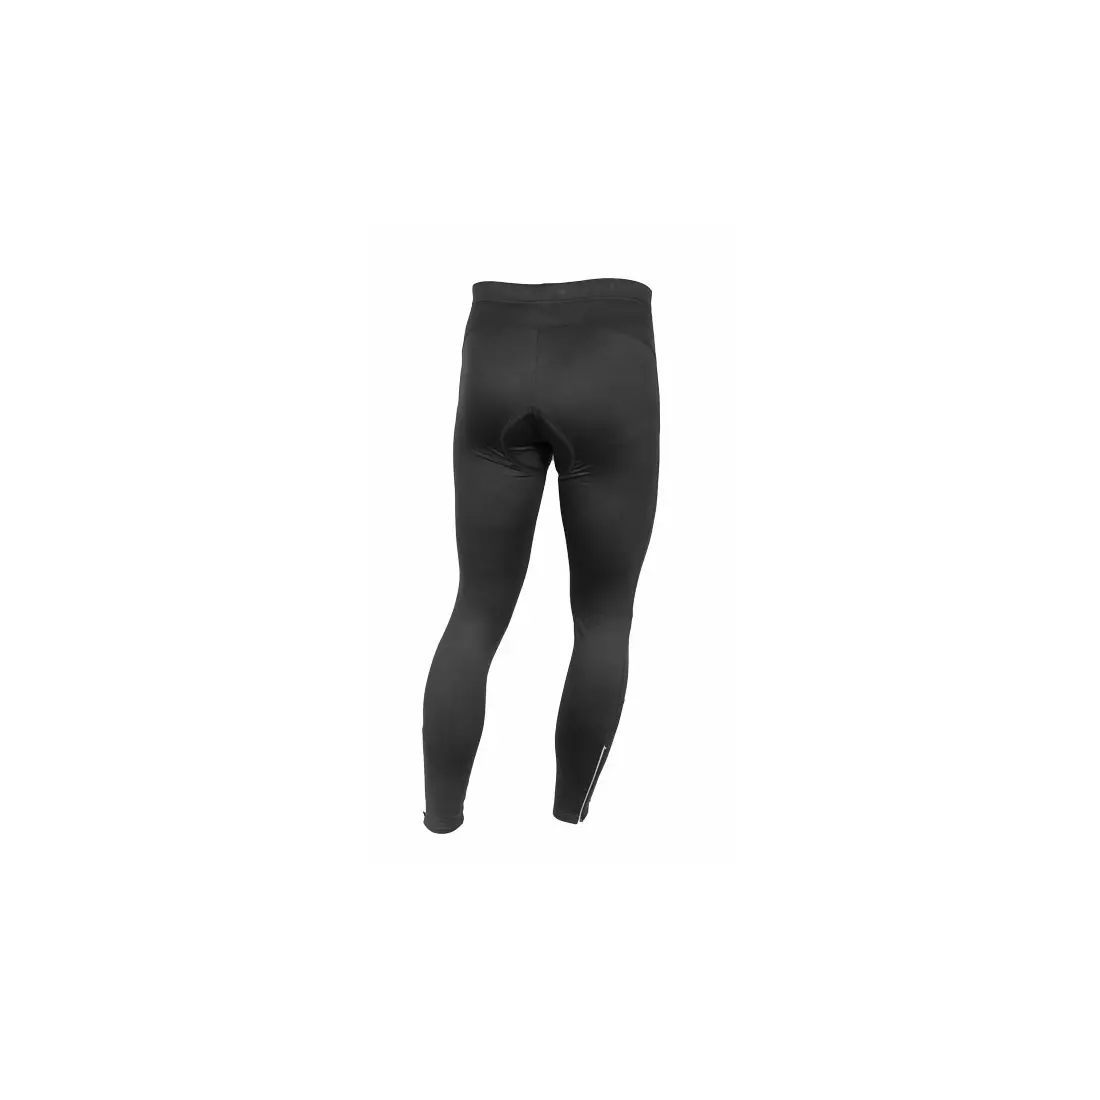 CRIVIT - uninsulated cycling pants, coolmax - black